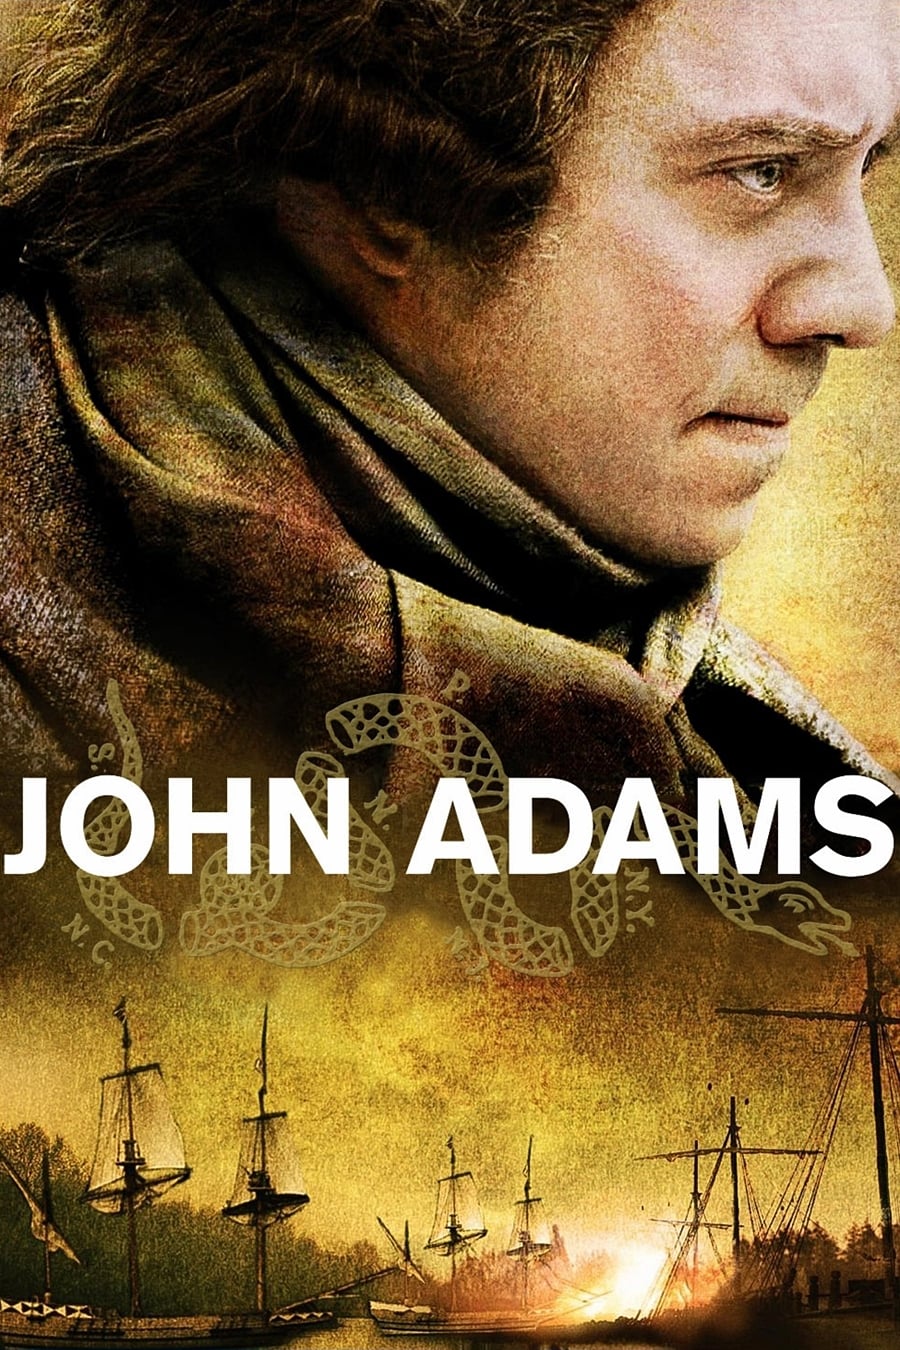 John Adams TV Shows About 18th Century